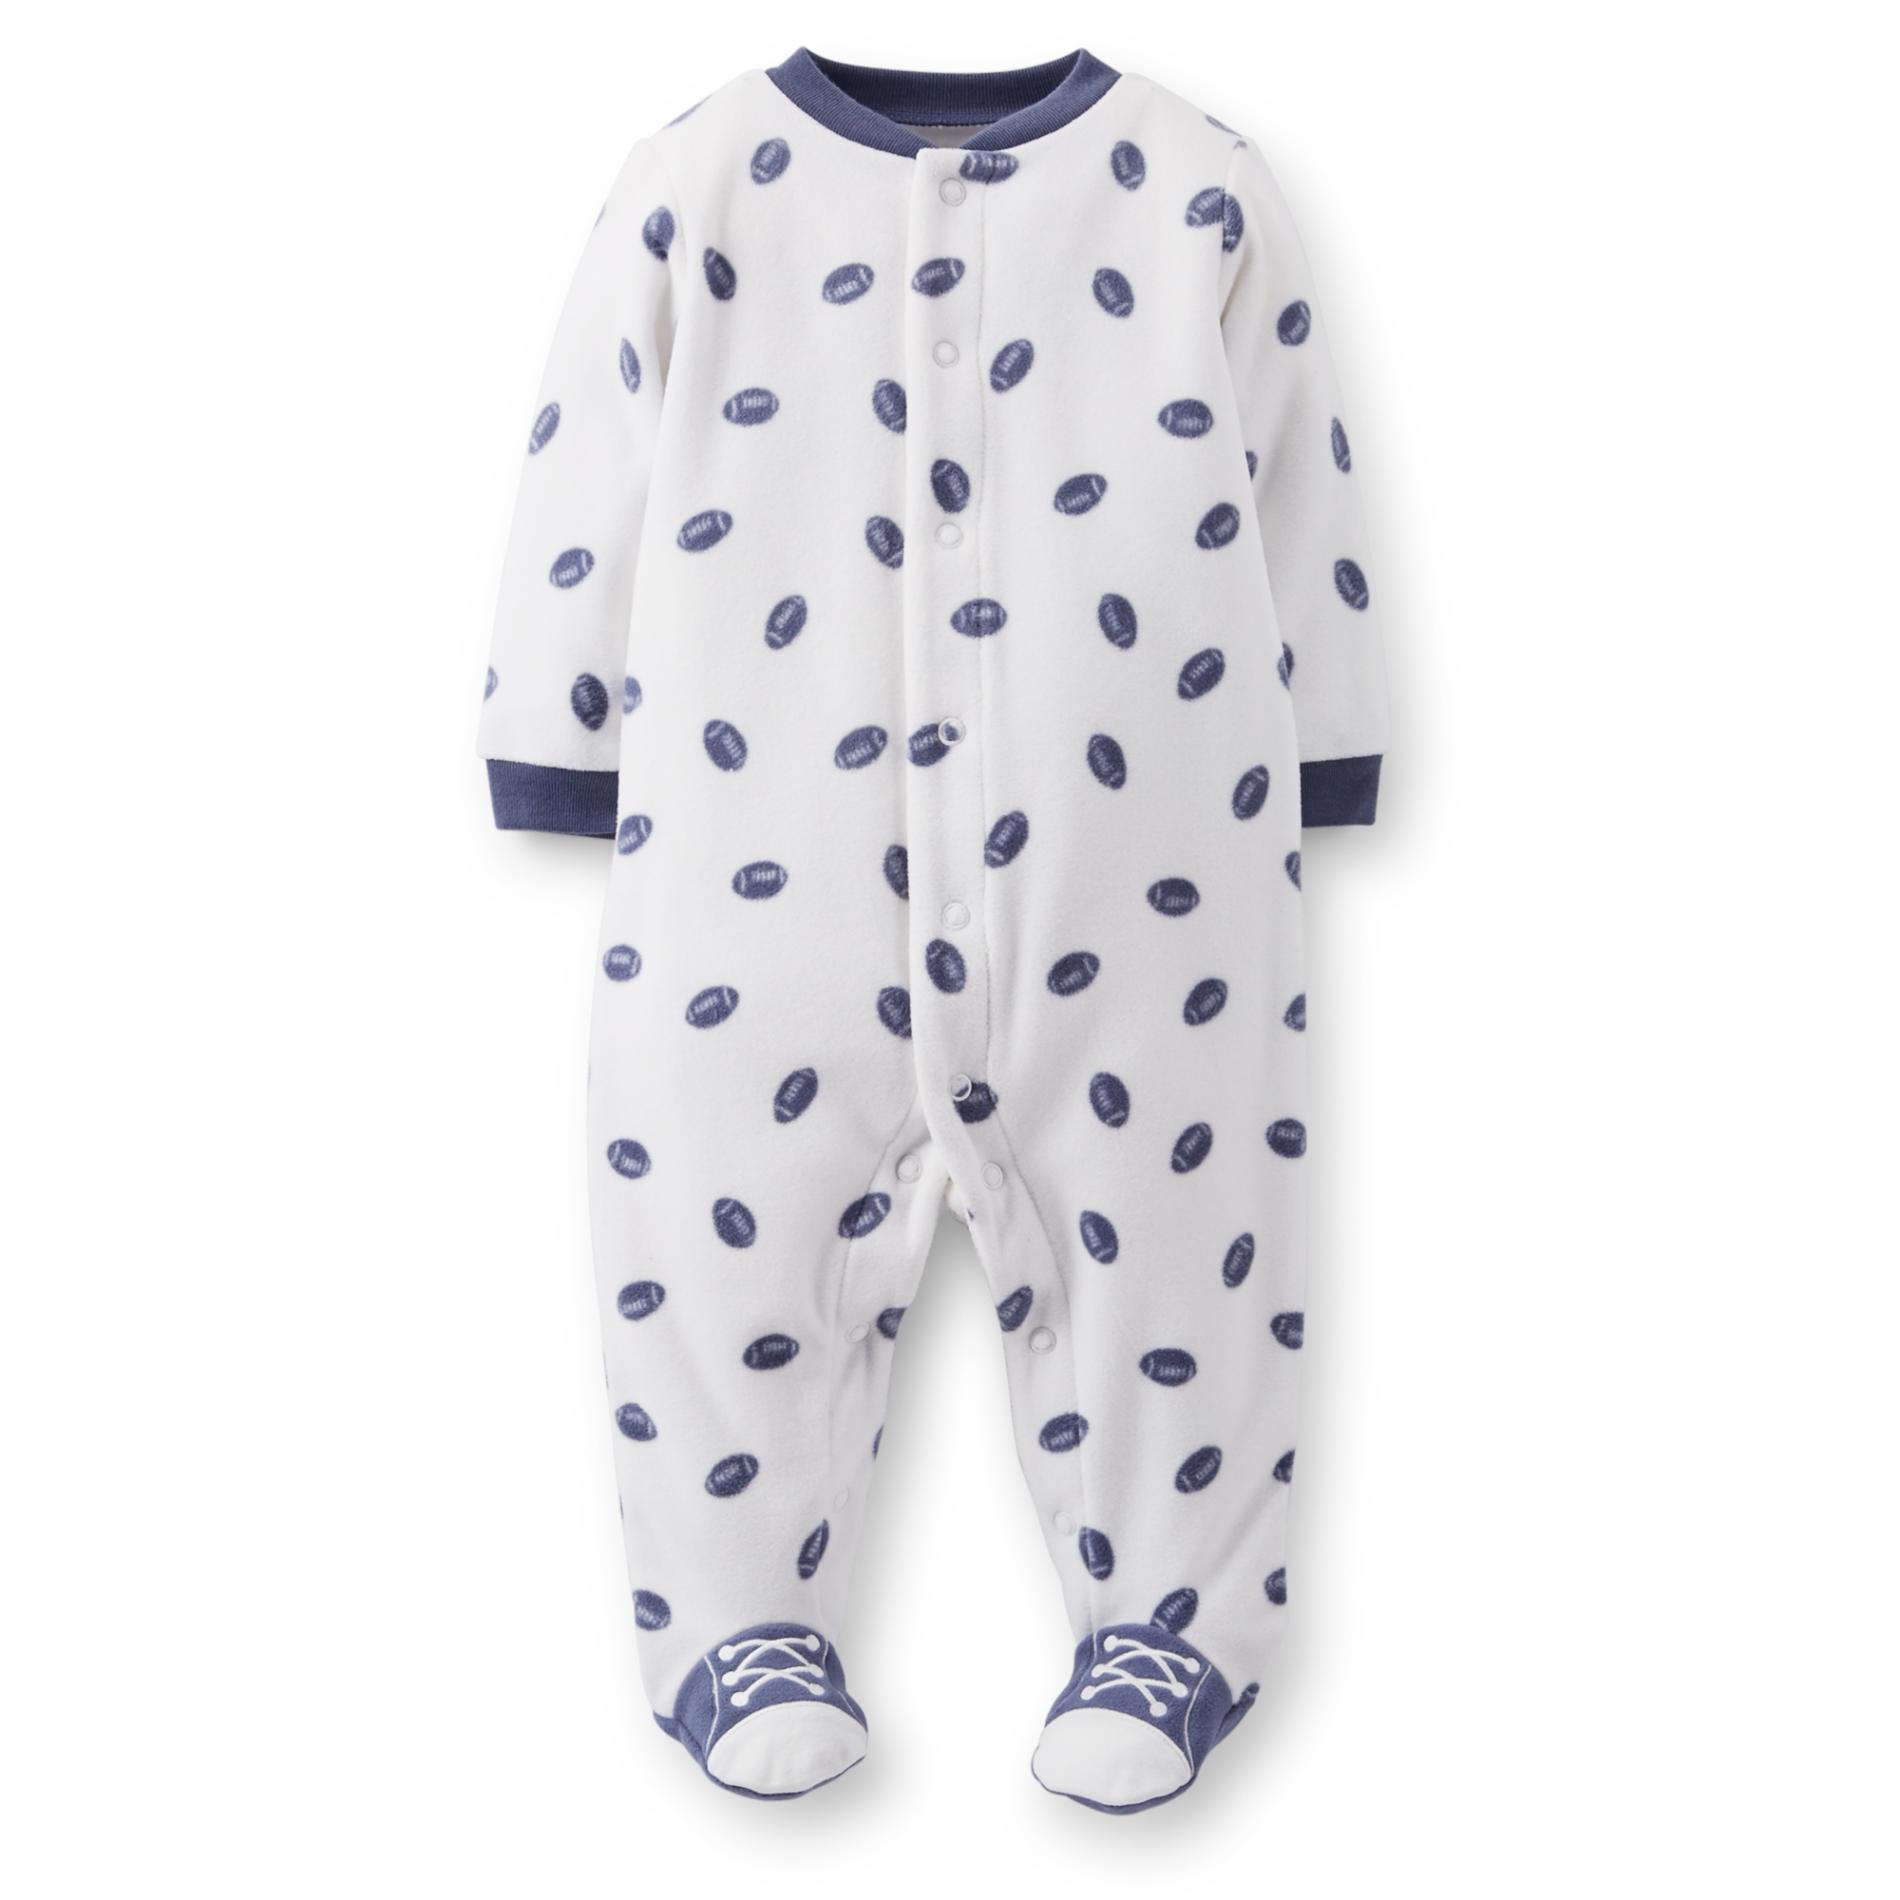 Carter's Newborn Boy's Microfleece Sleeper Pajamas - Footballs